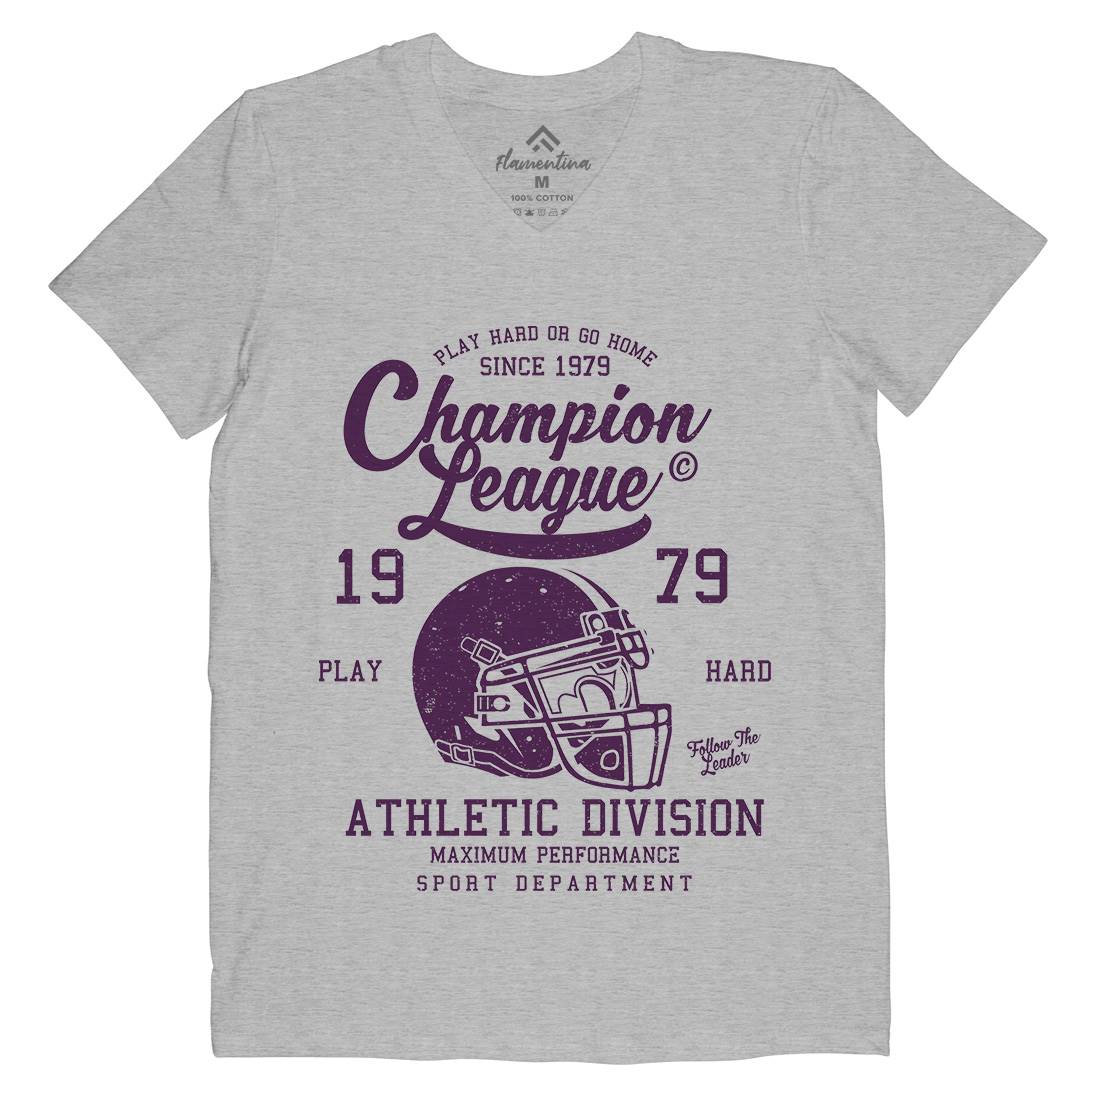 Champion League Mens Organic V-Neck T-Shirt Sport A031